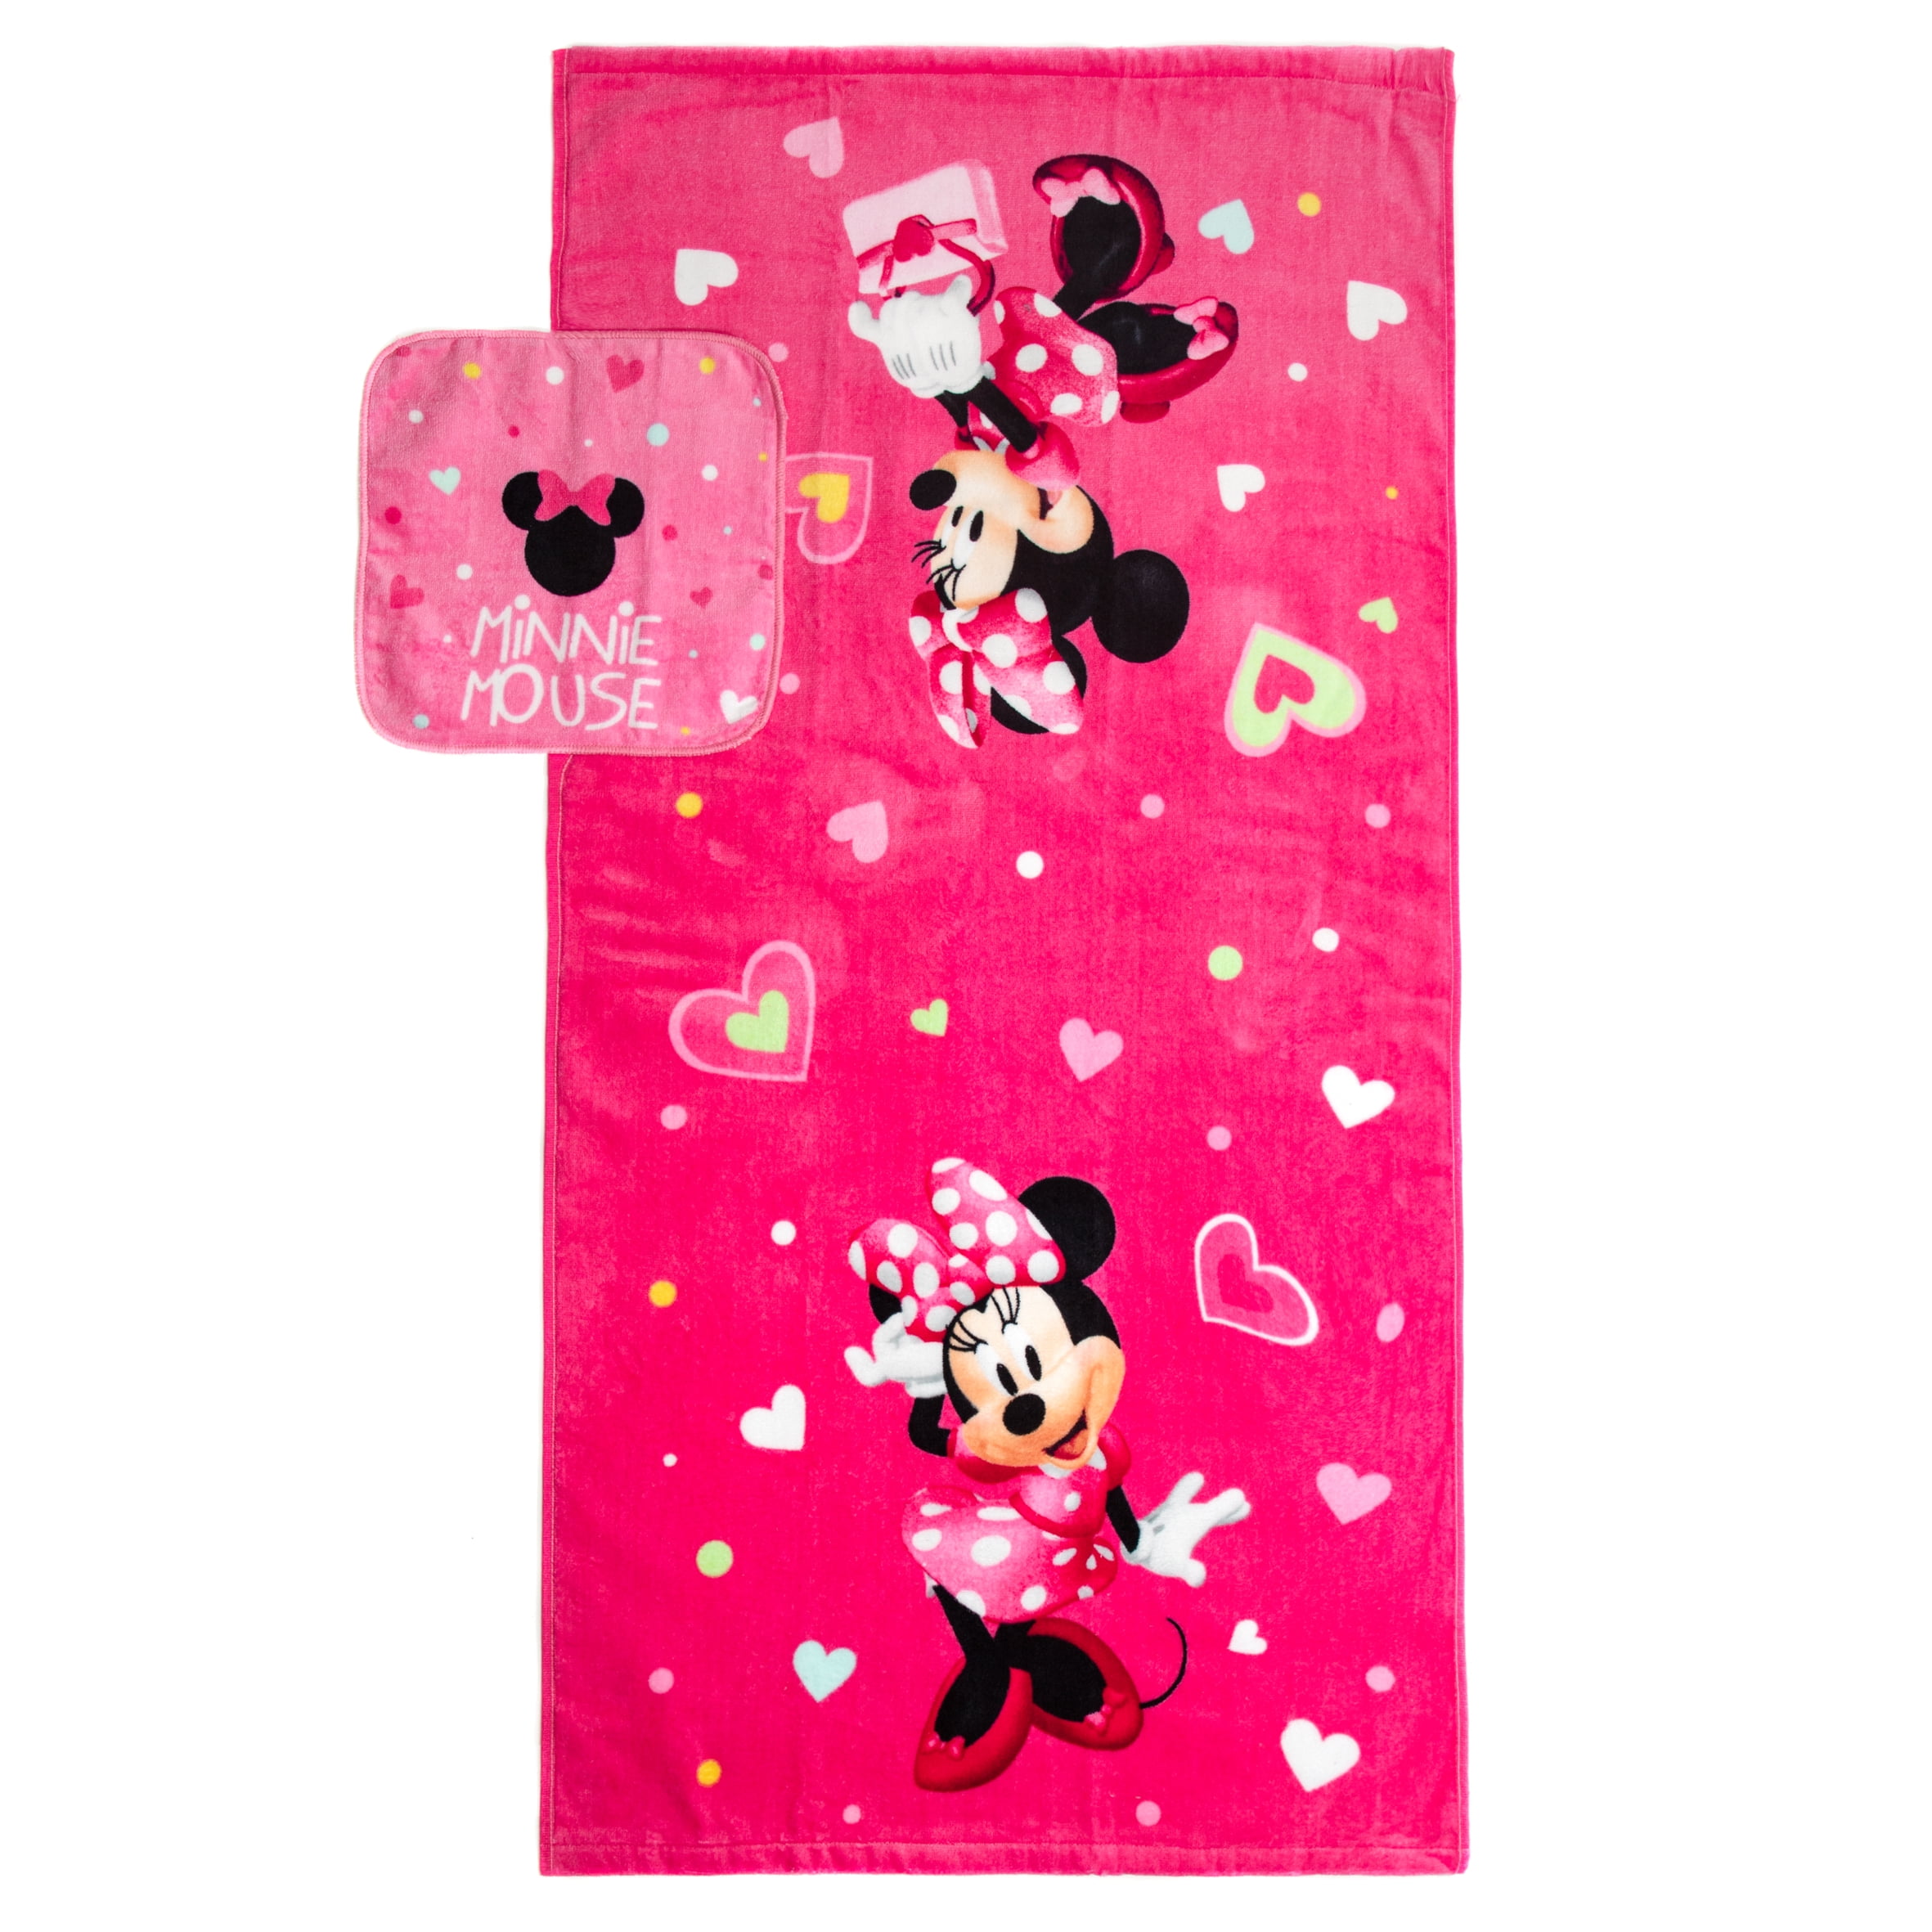 Minnie Mouse Varsity Girls Pink Beach Bath Towel Holiday Swimming Large 75x150cm 